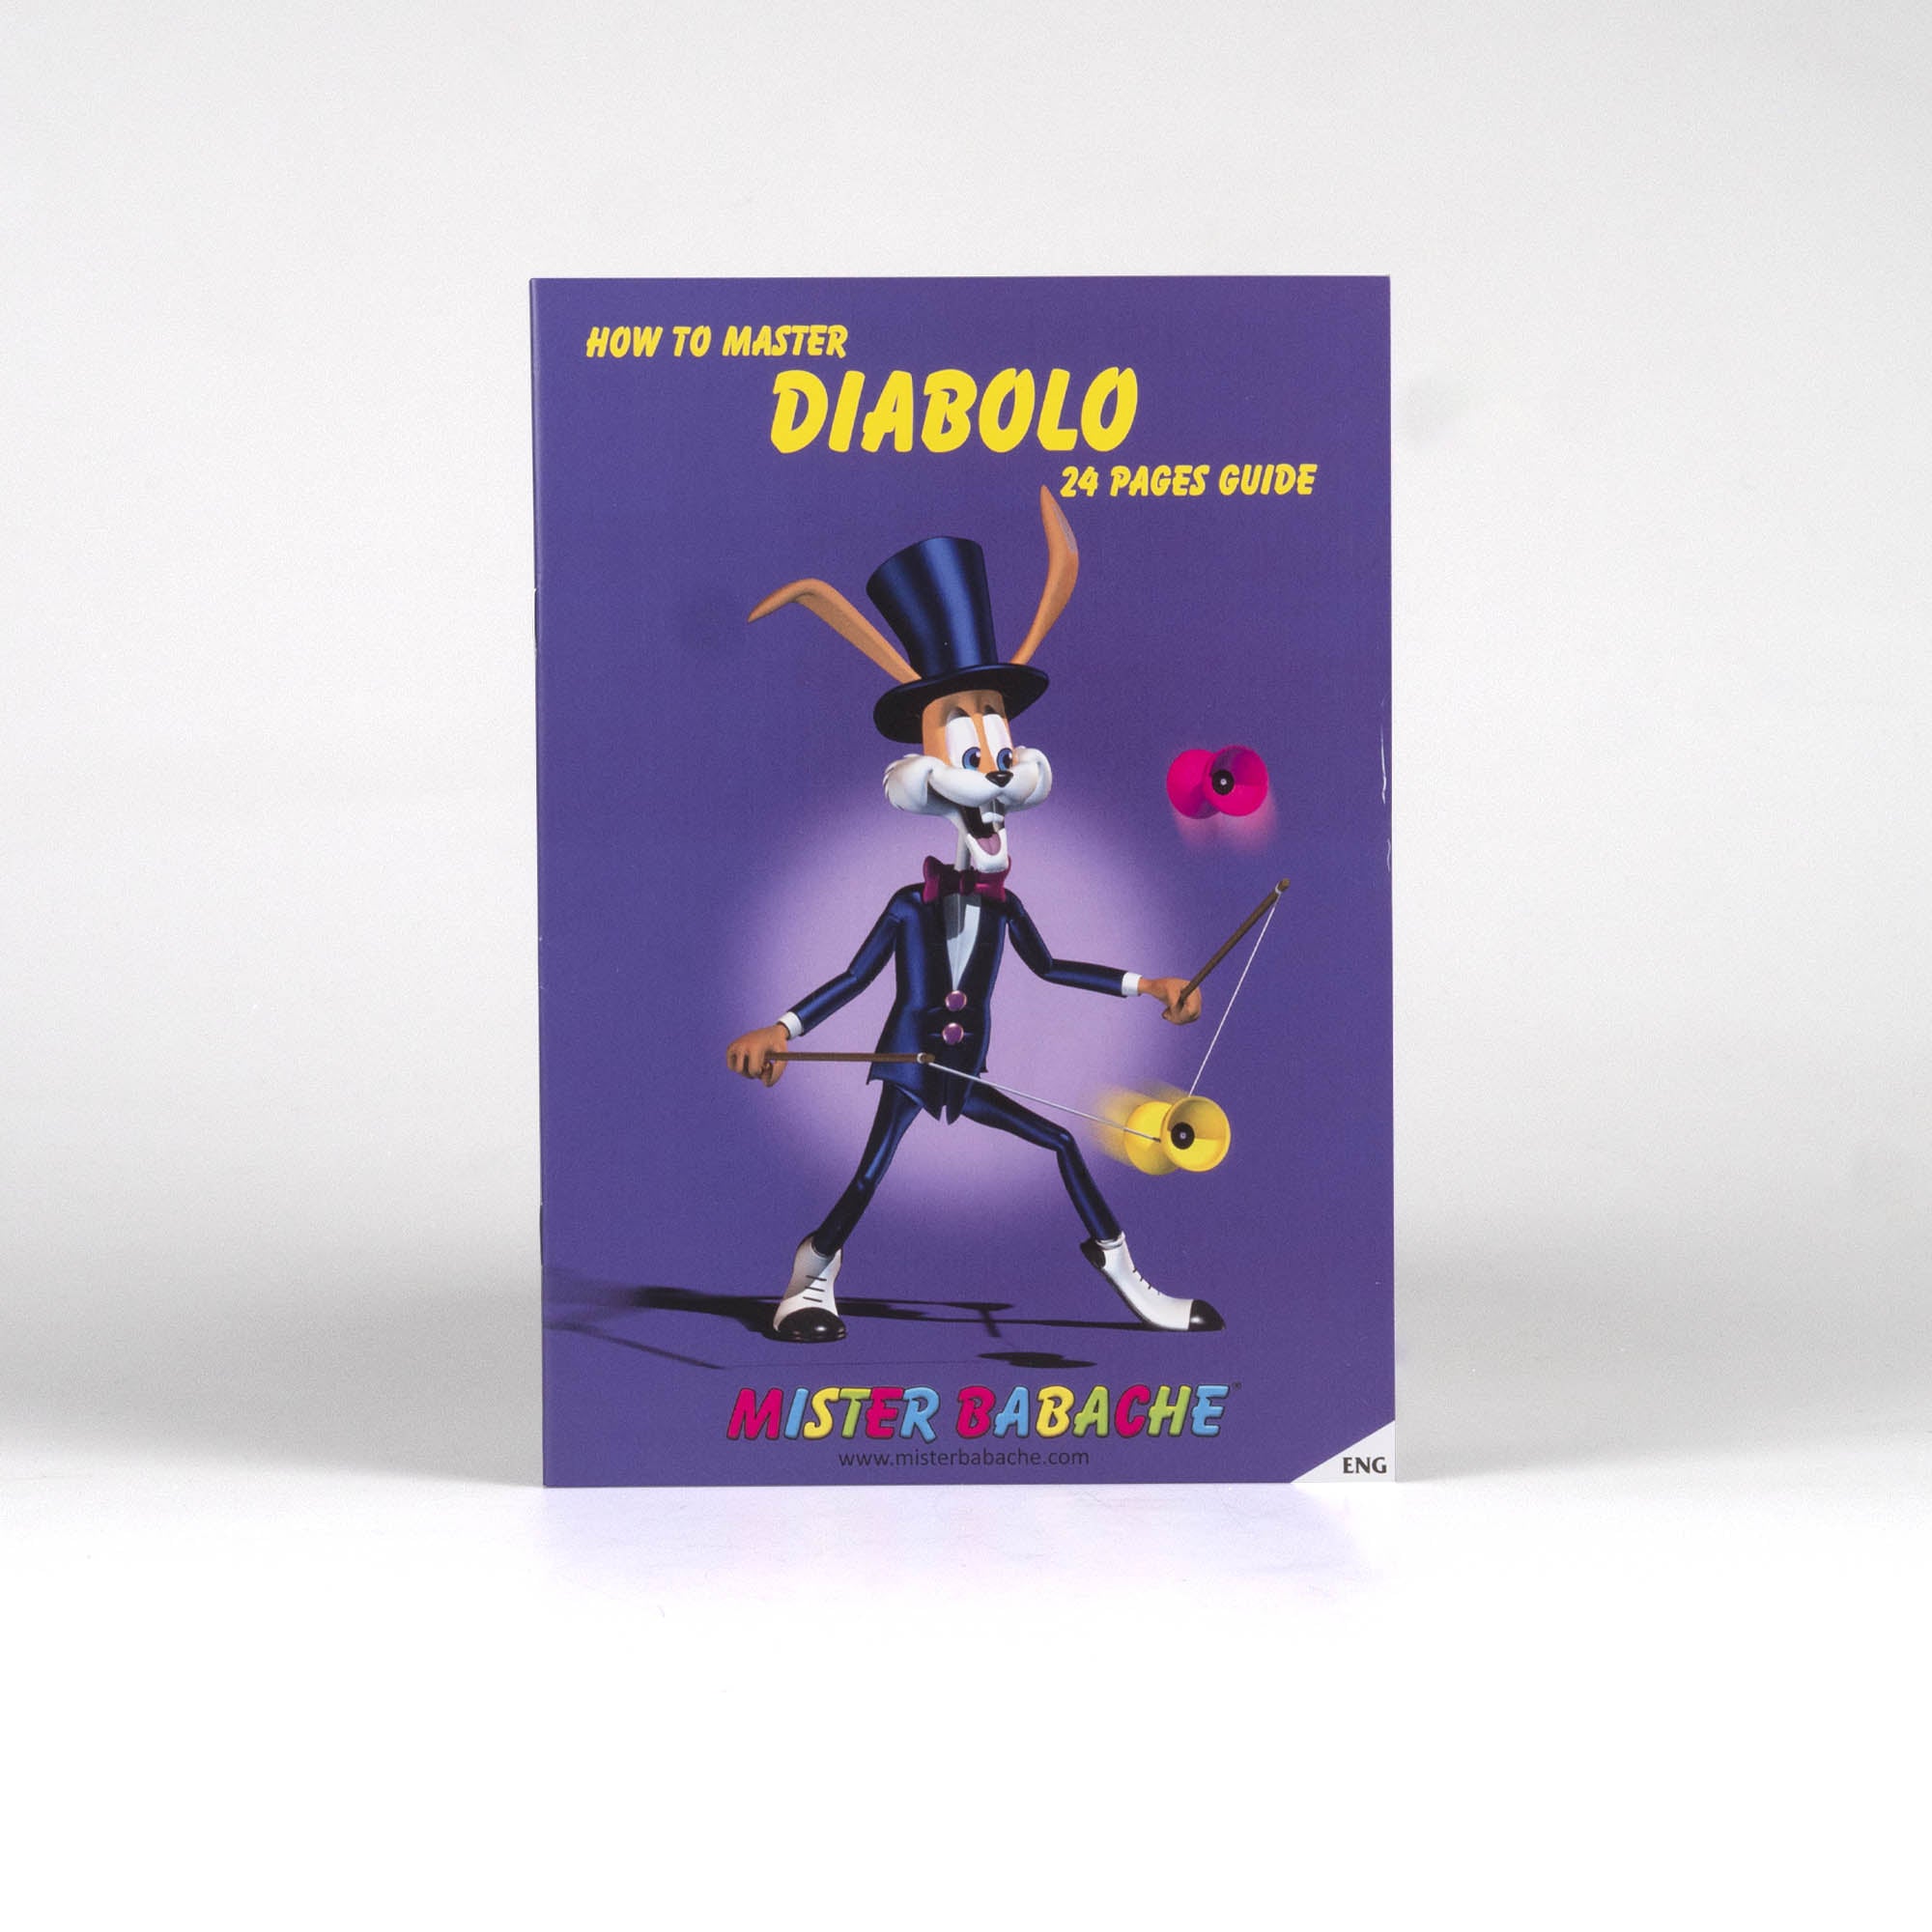 Diabolo booklet front cover